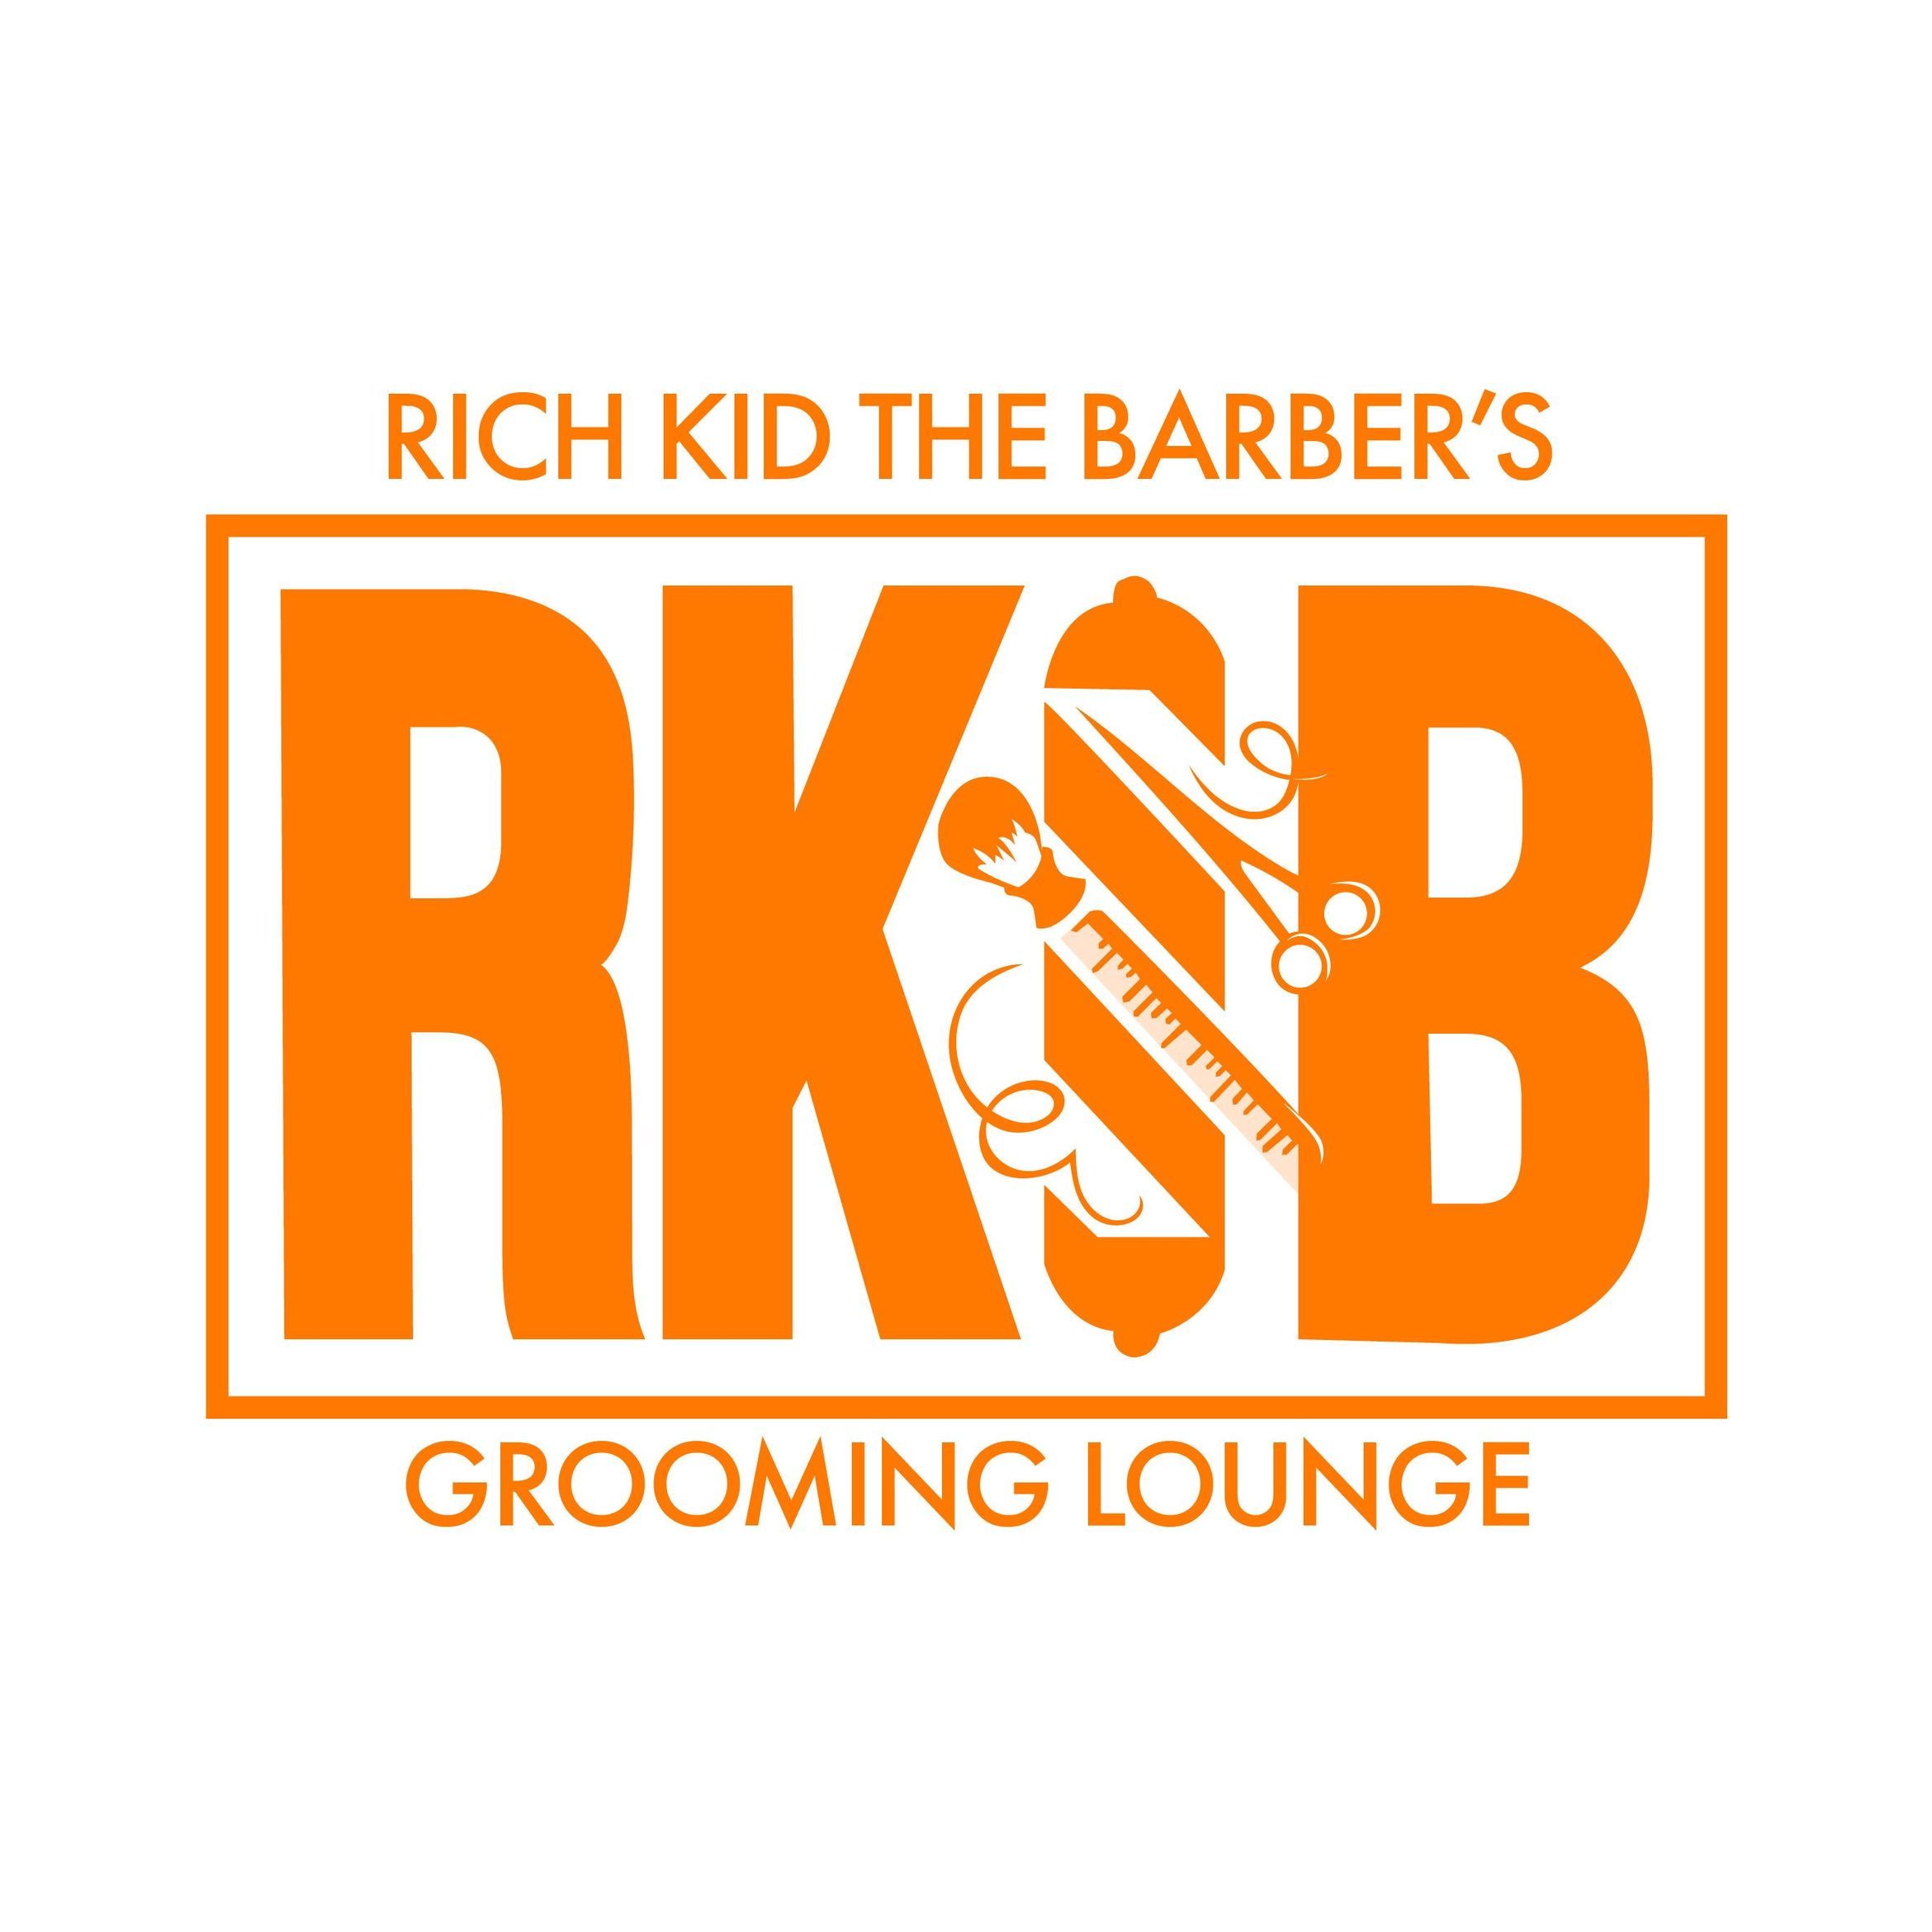 Richkid the barber’s grooming lounge, 210 Berriman St, Brooklyn, 11208